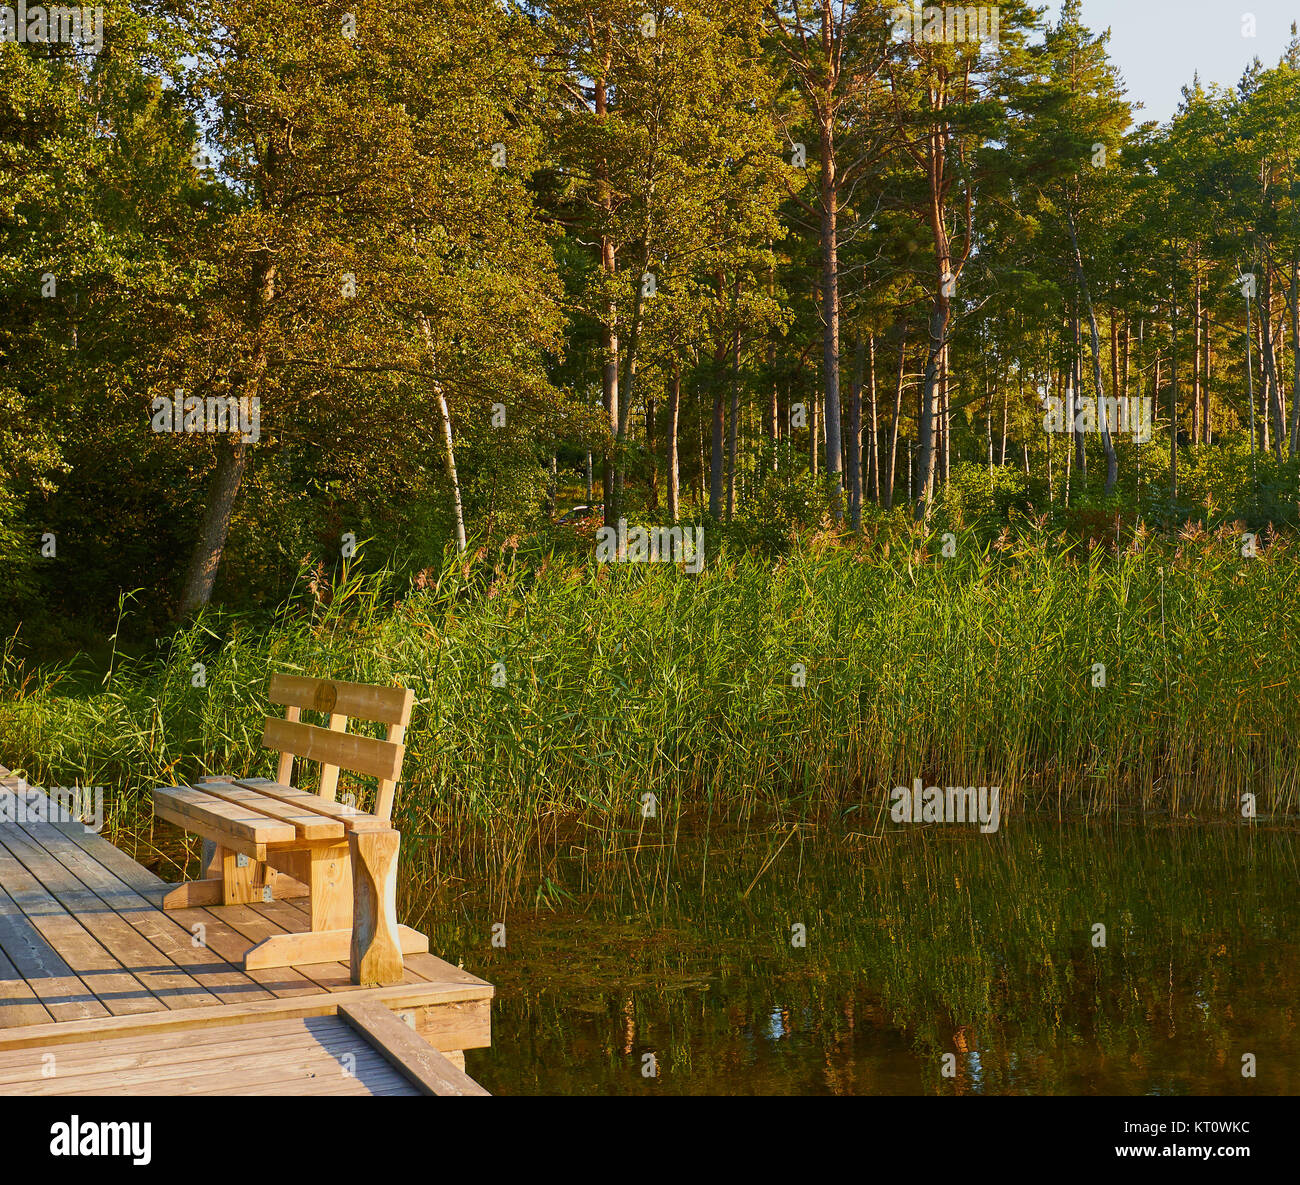 Wooden seat on jetty amongst nature, Sweden, Scandinavia Stock Photo